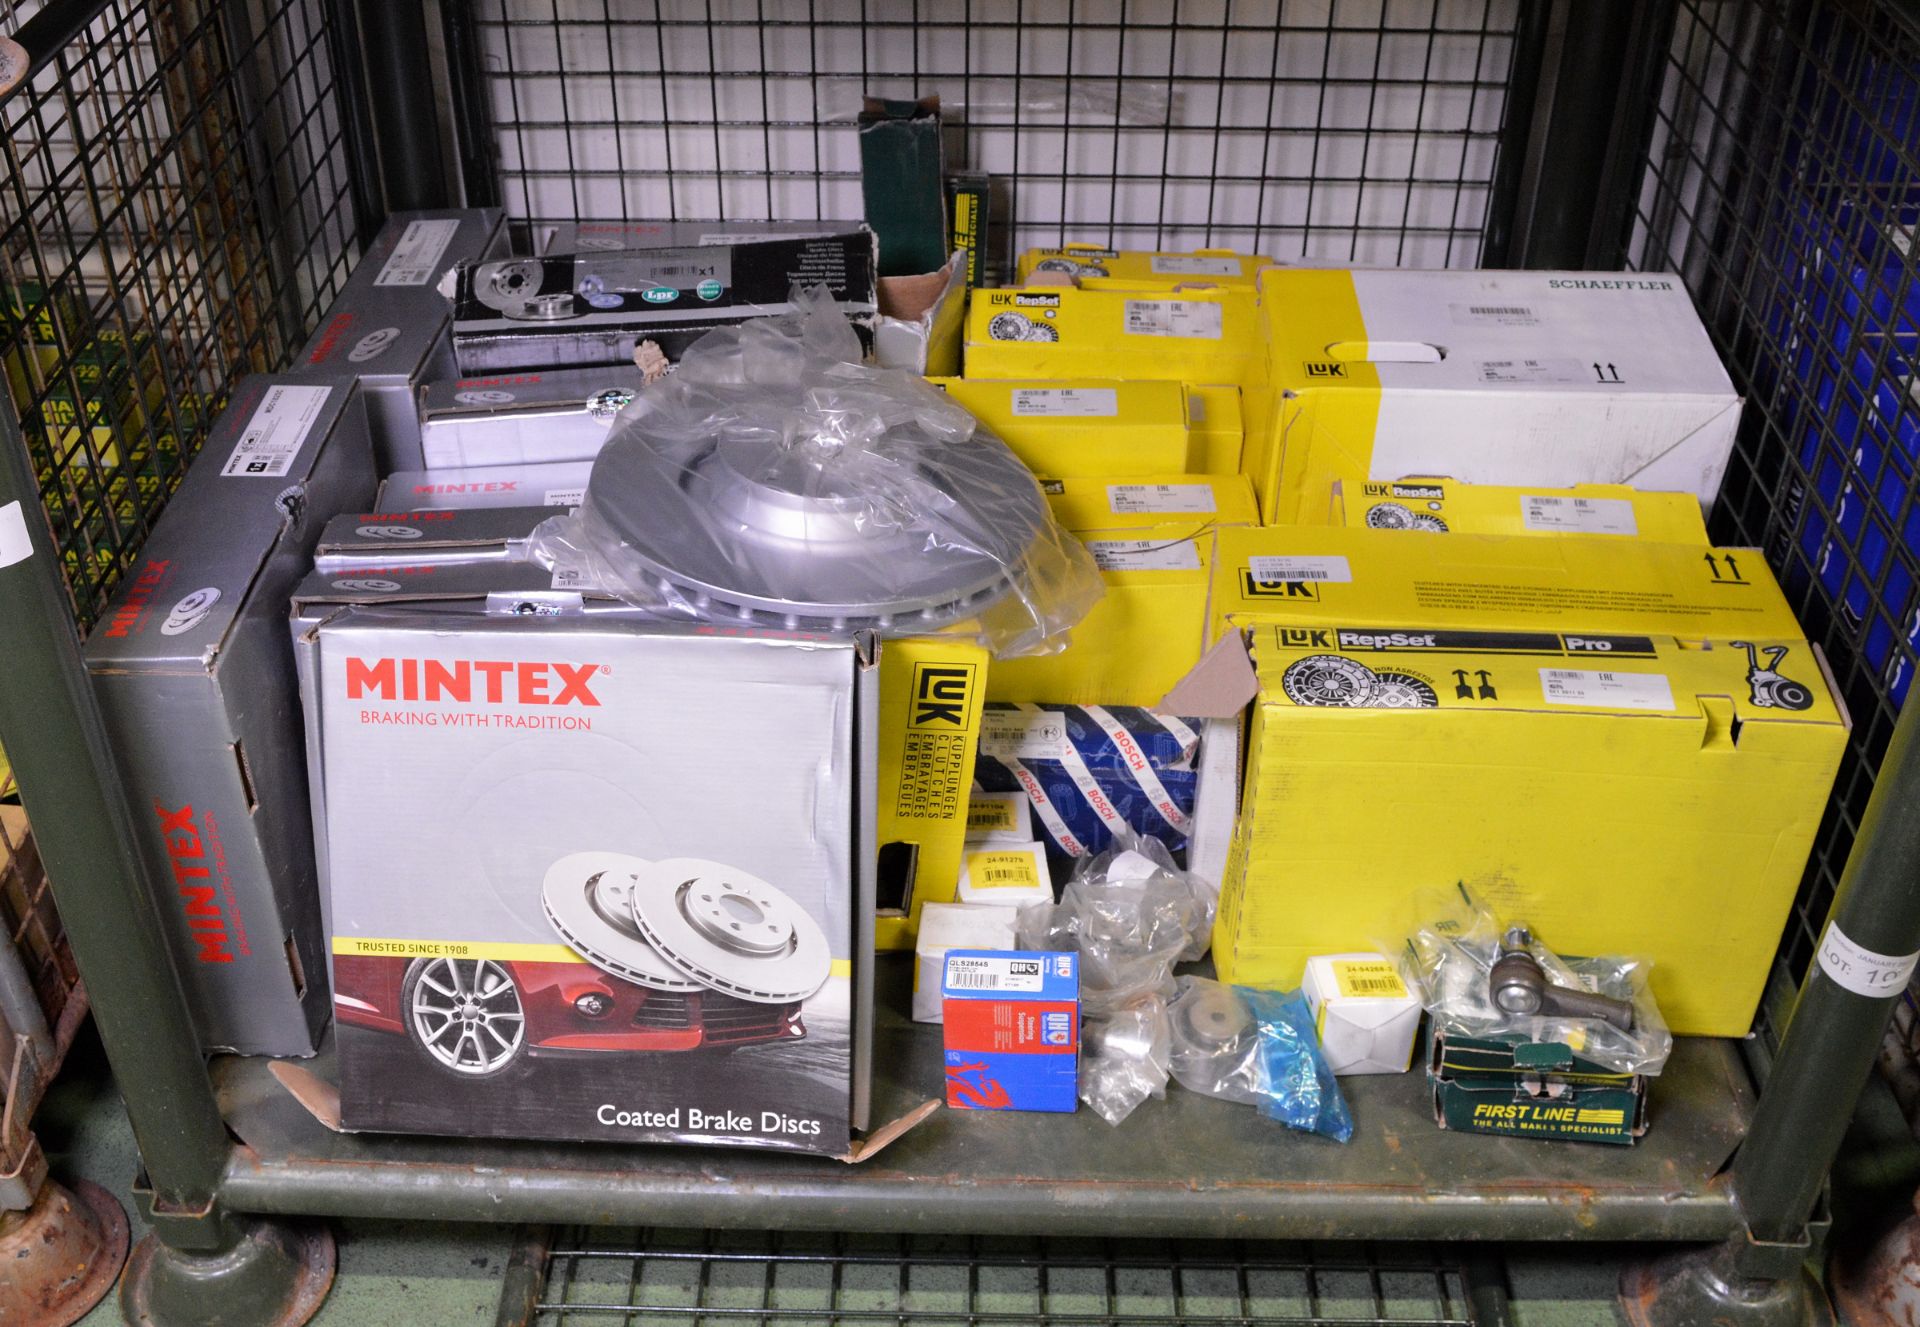 Vehicle parts - Mintex brake discs, LUK Repset clutch kits, stabiliser link, tie rod end